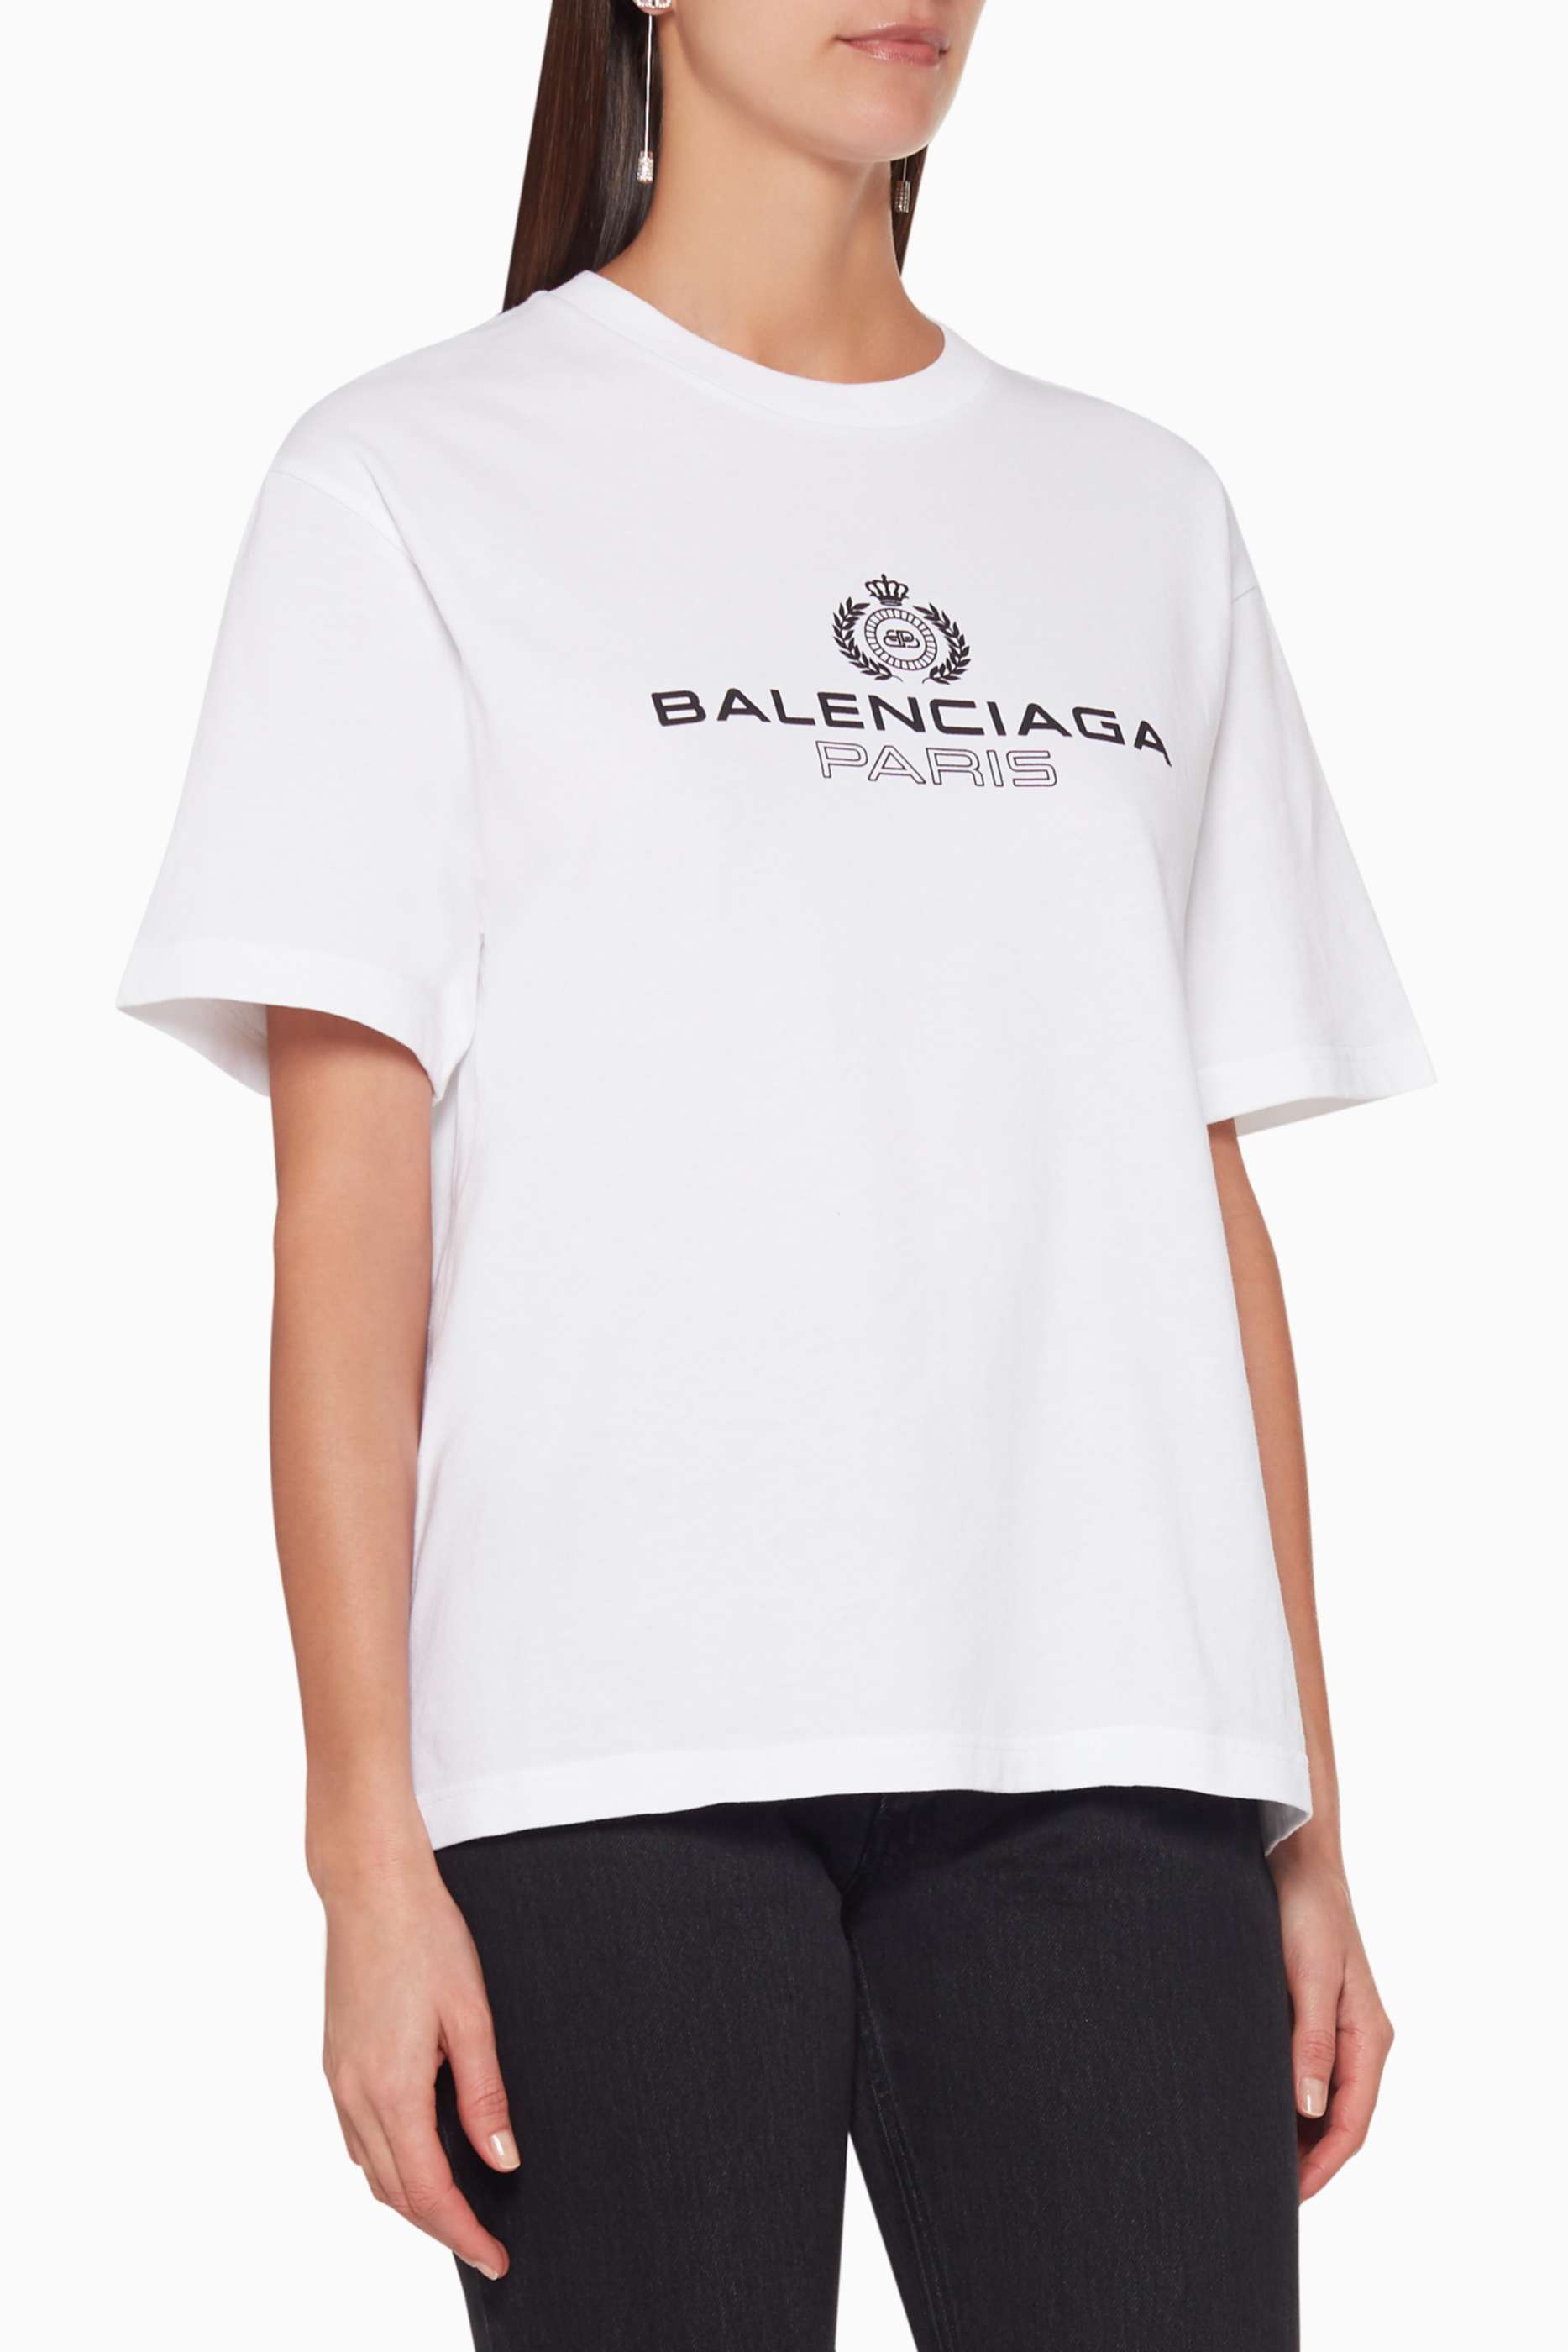 Shop Balenciaga White Paris T-Shirt for Women | Ounass UAE